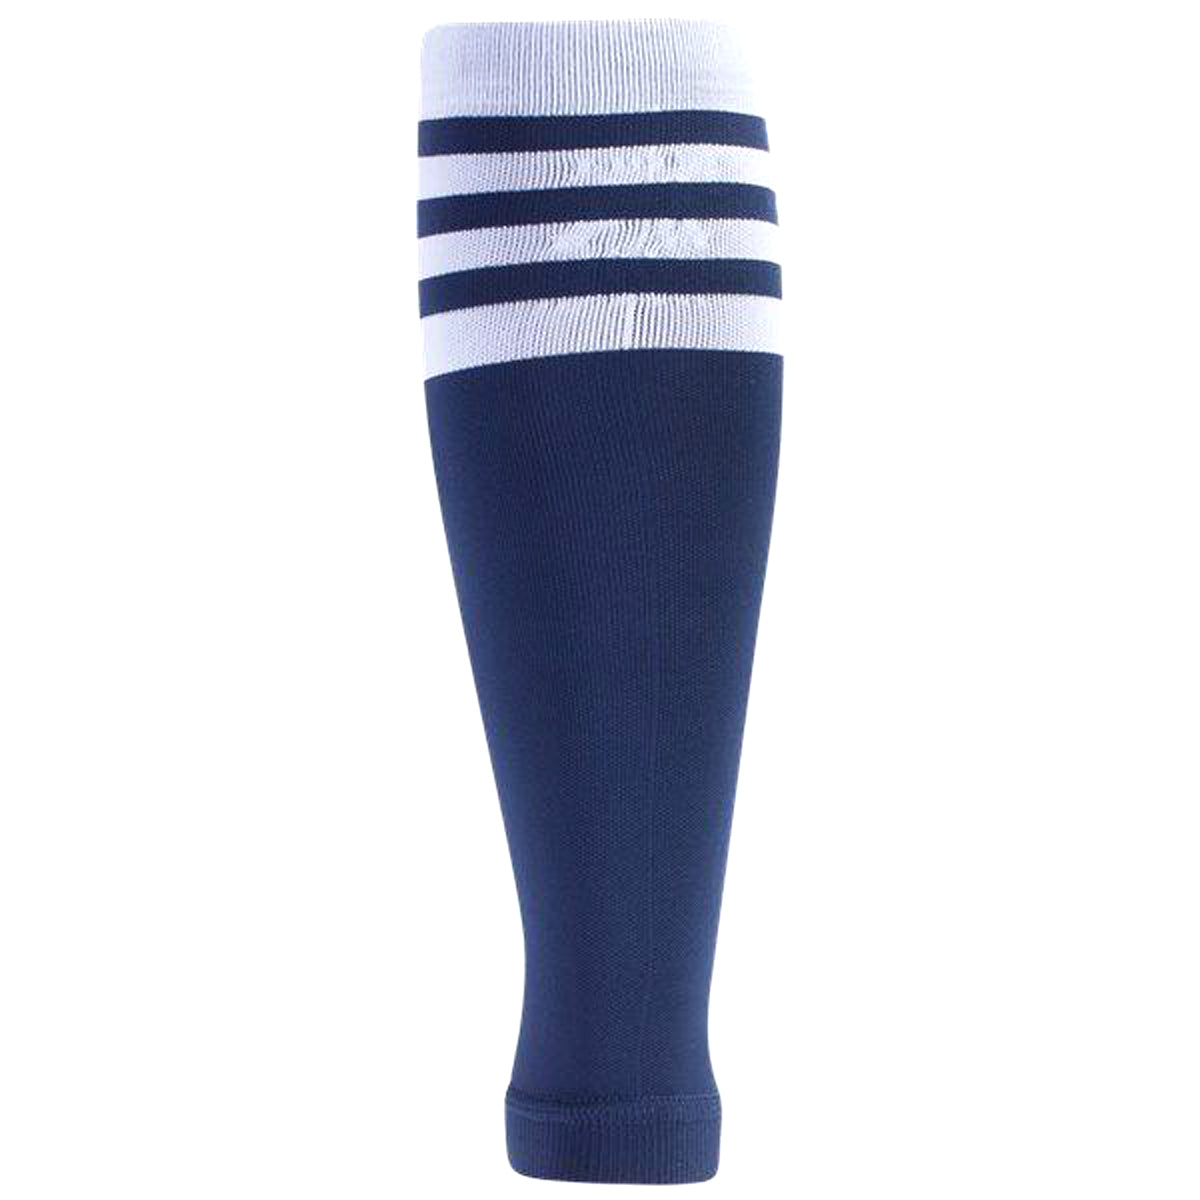 Adidas Team Speed Sock System Calf Sleeve (1 pair)